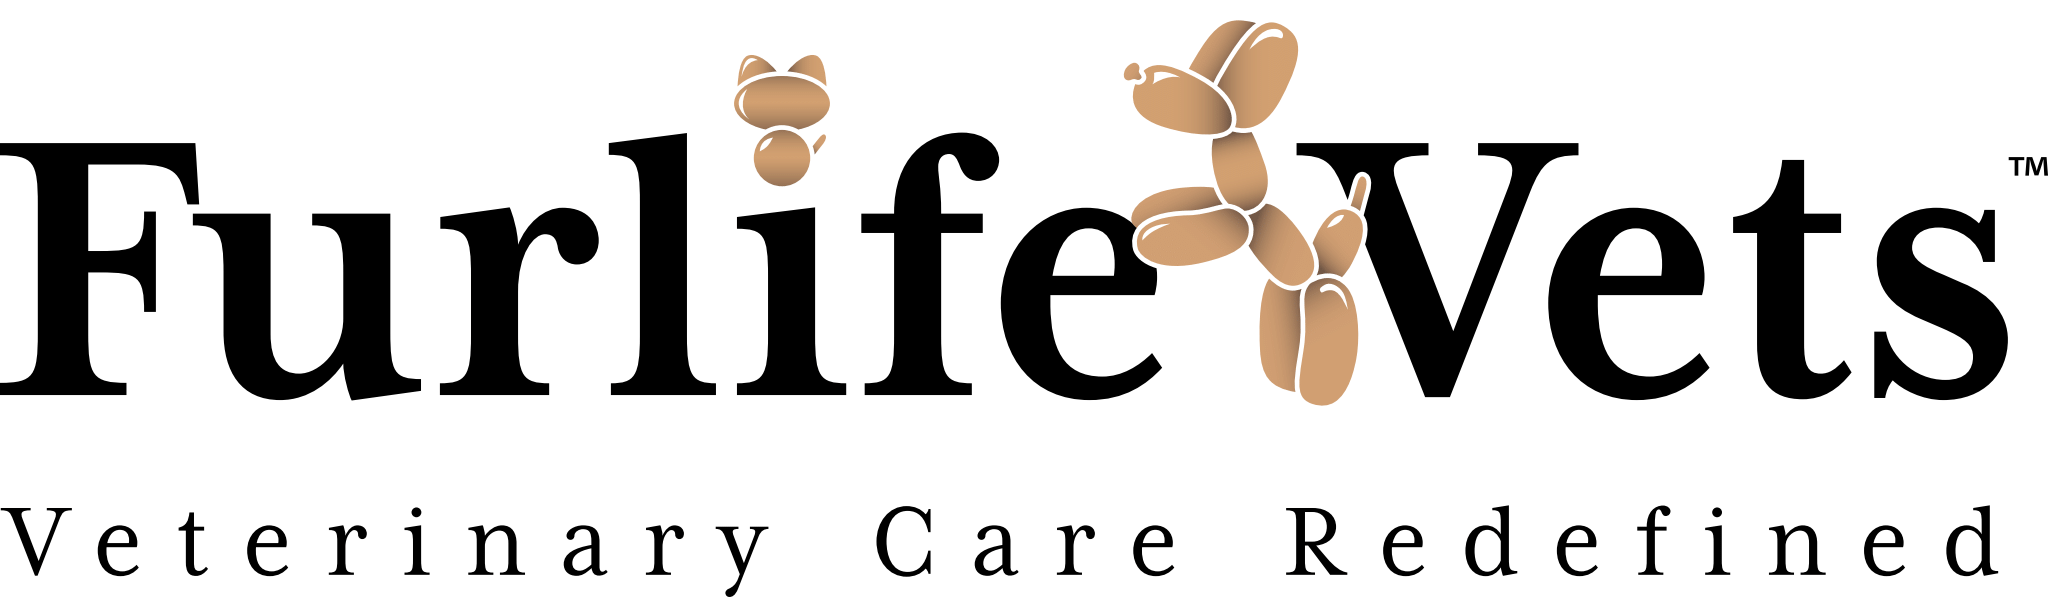 Furlife Vets logo